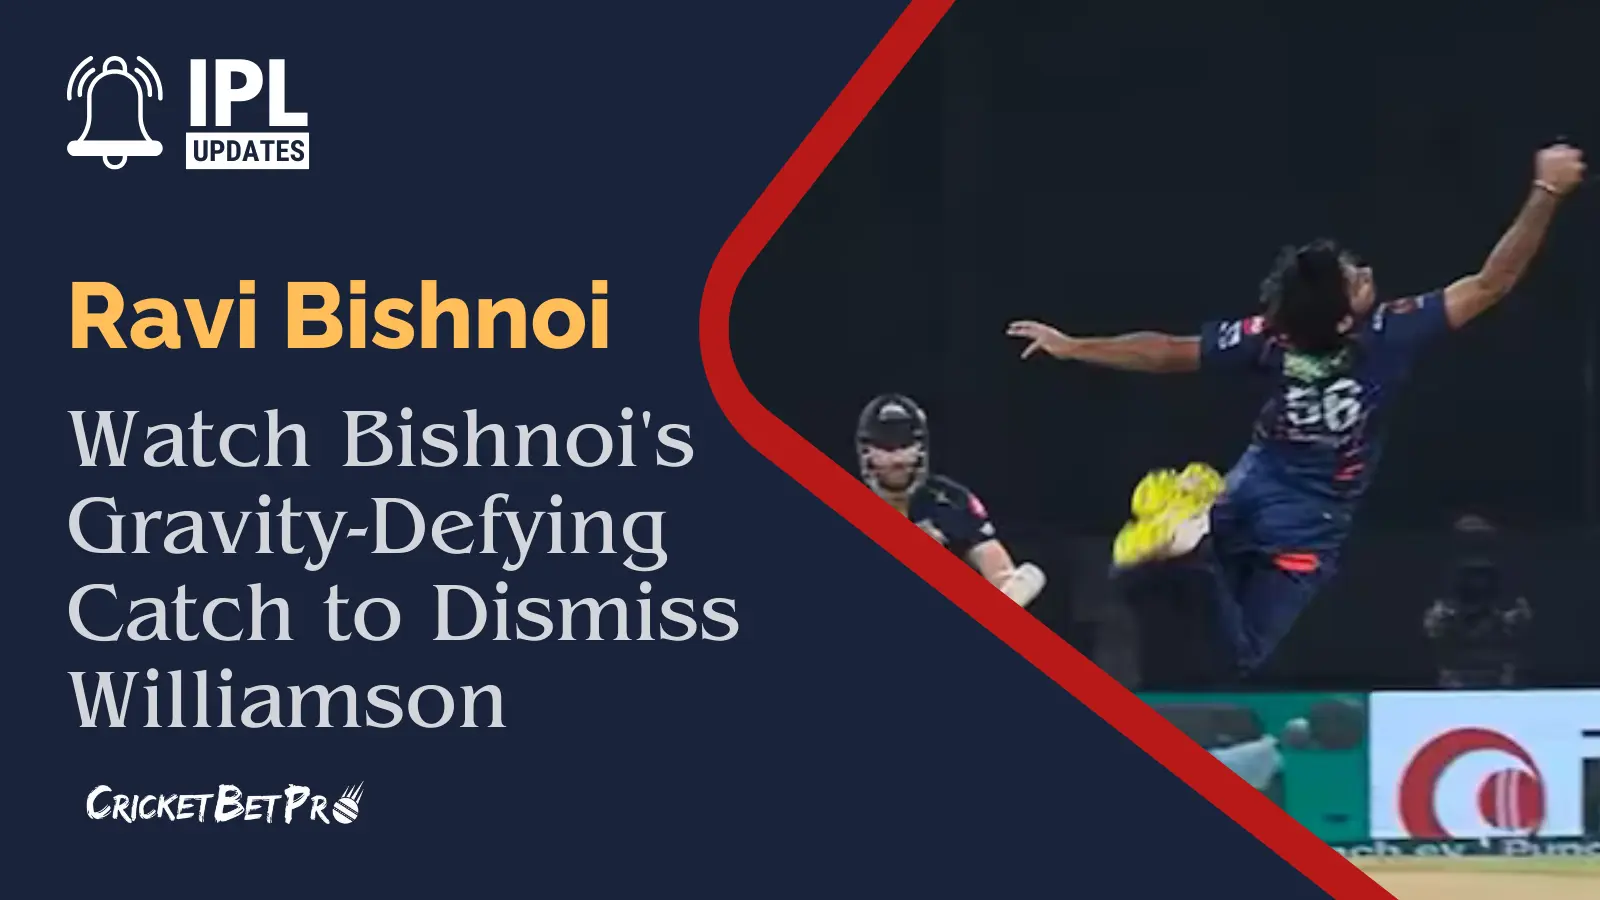 Bishnoi's Gravity-Defying Catch